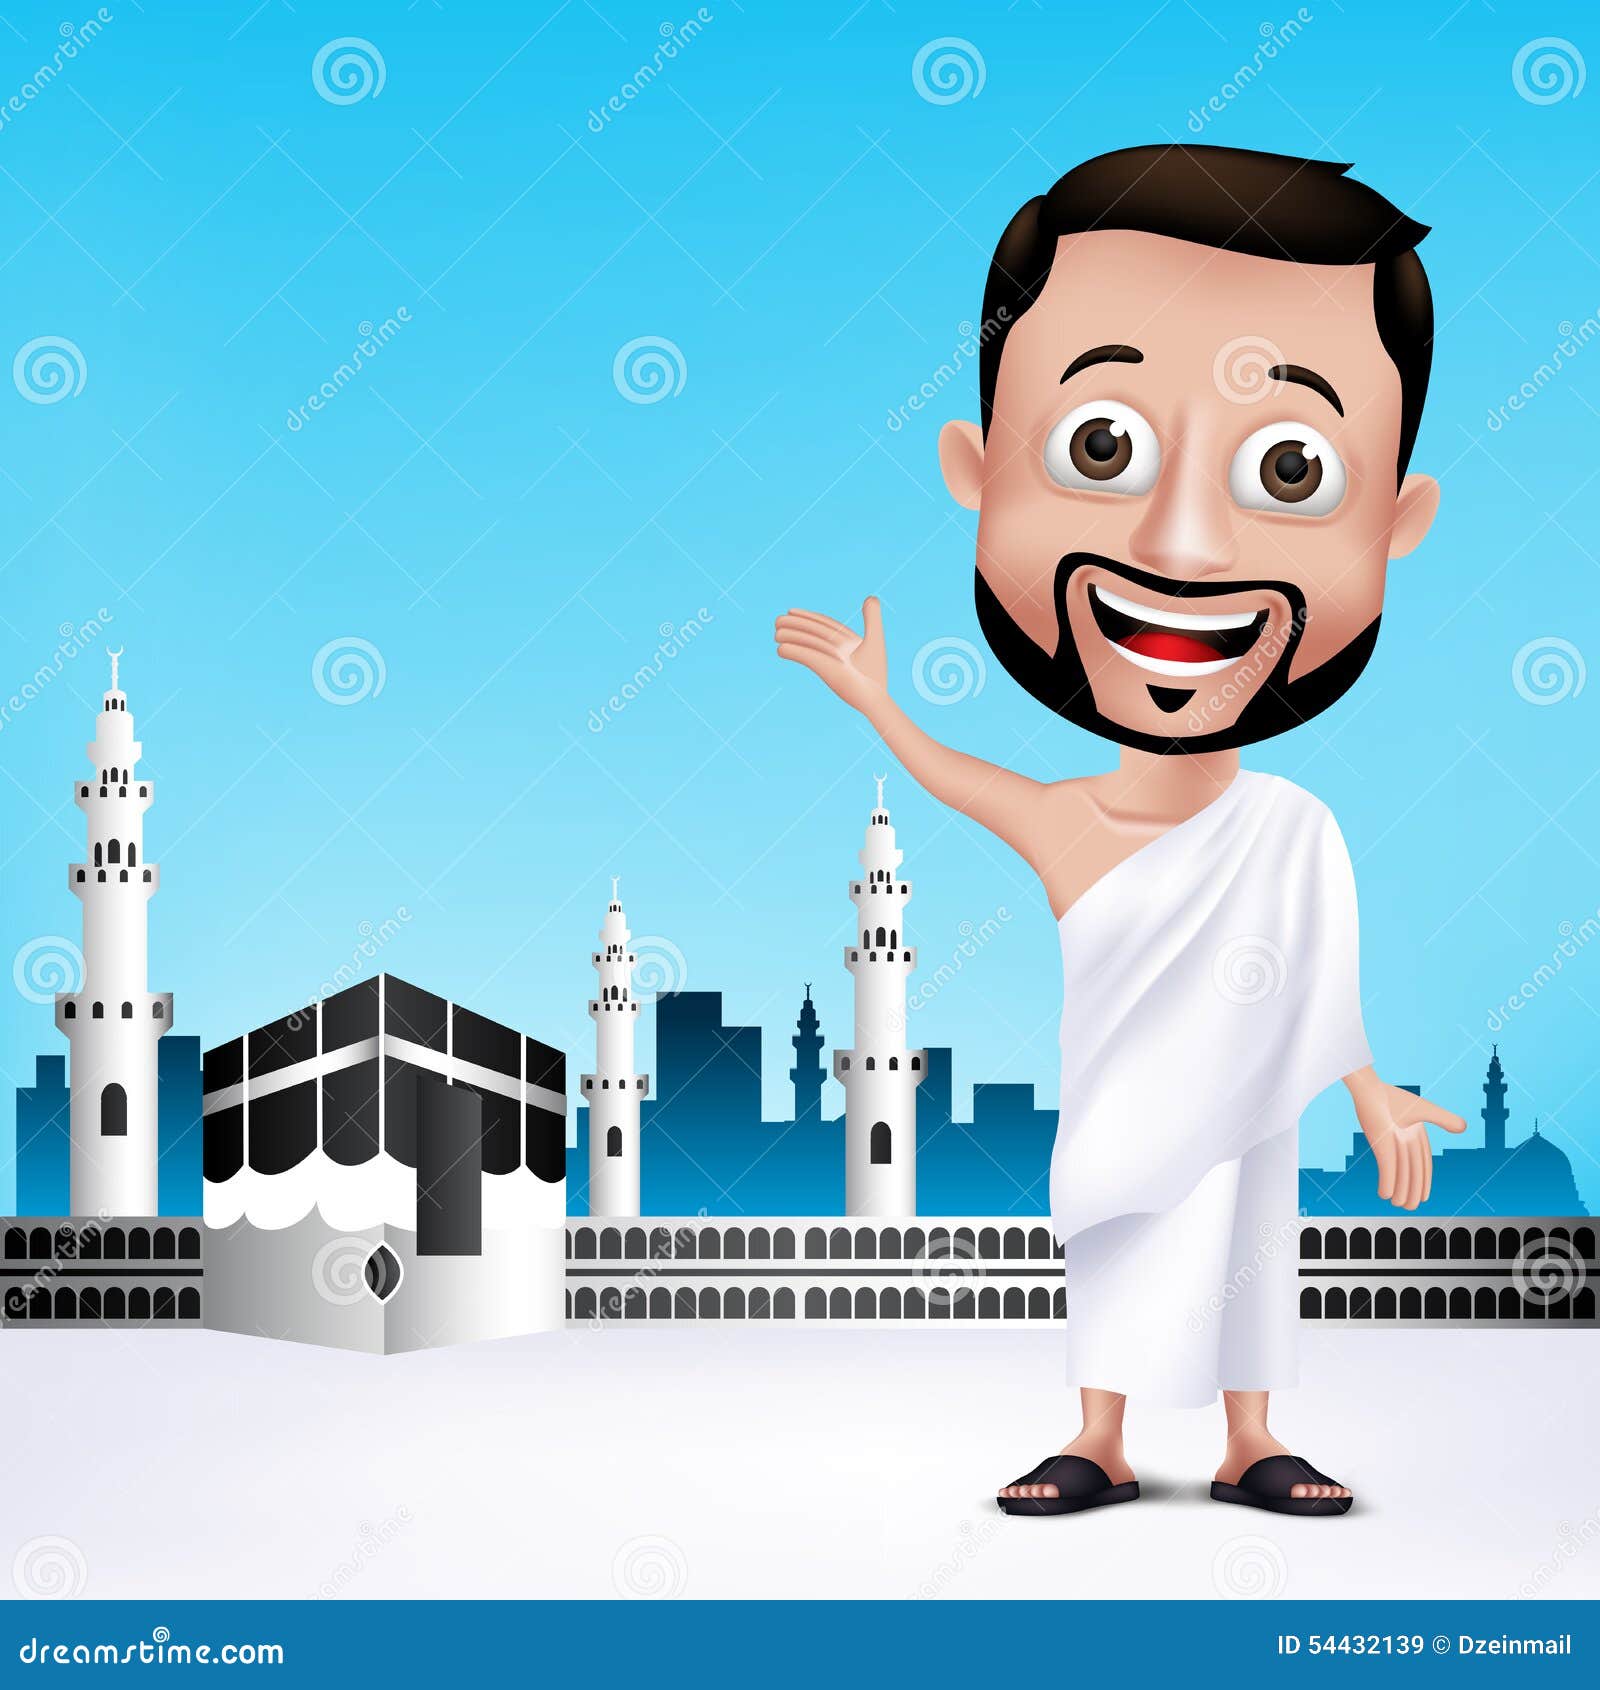 muslim man characters wearing ihram cloths for performing hajj or umrah